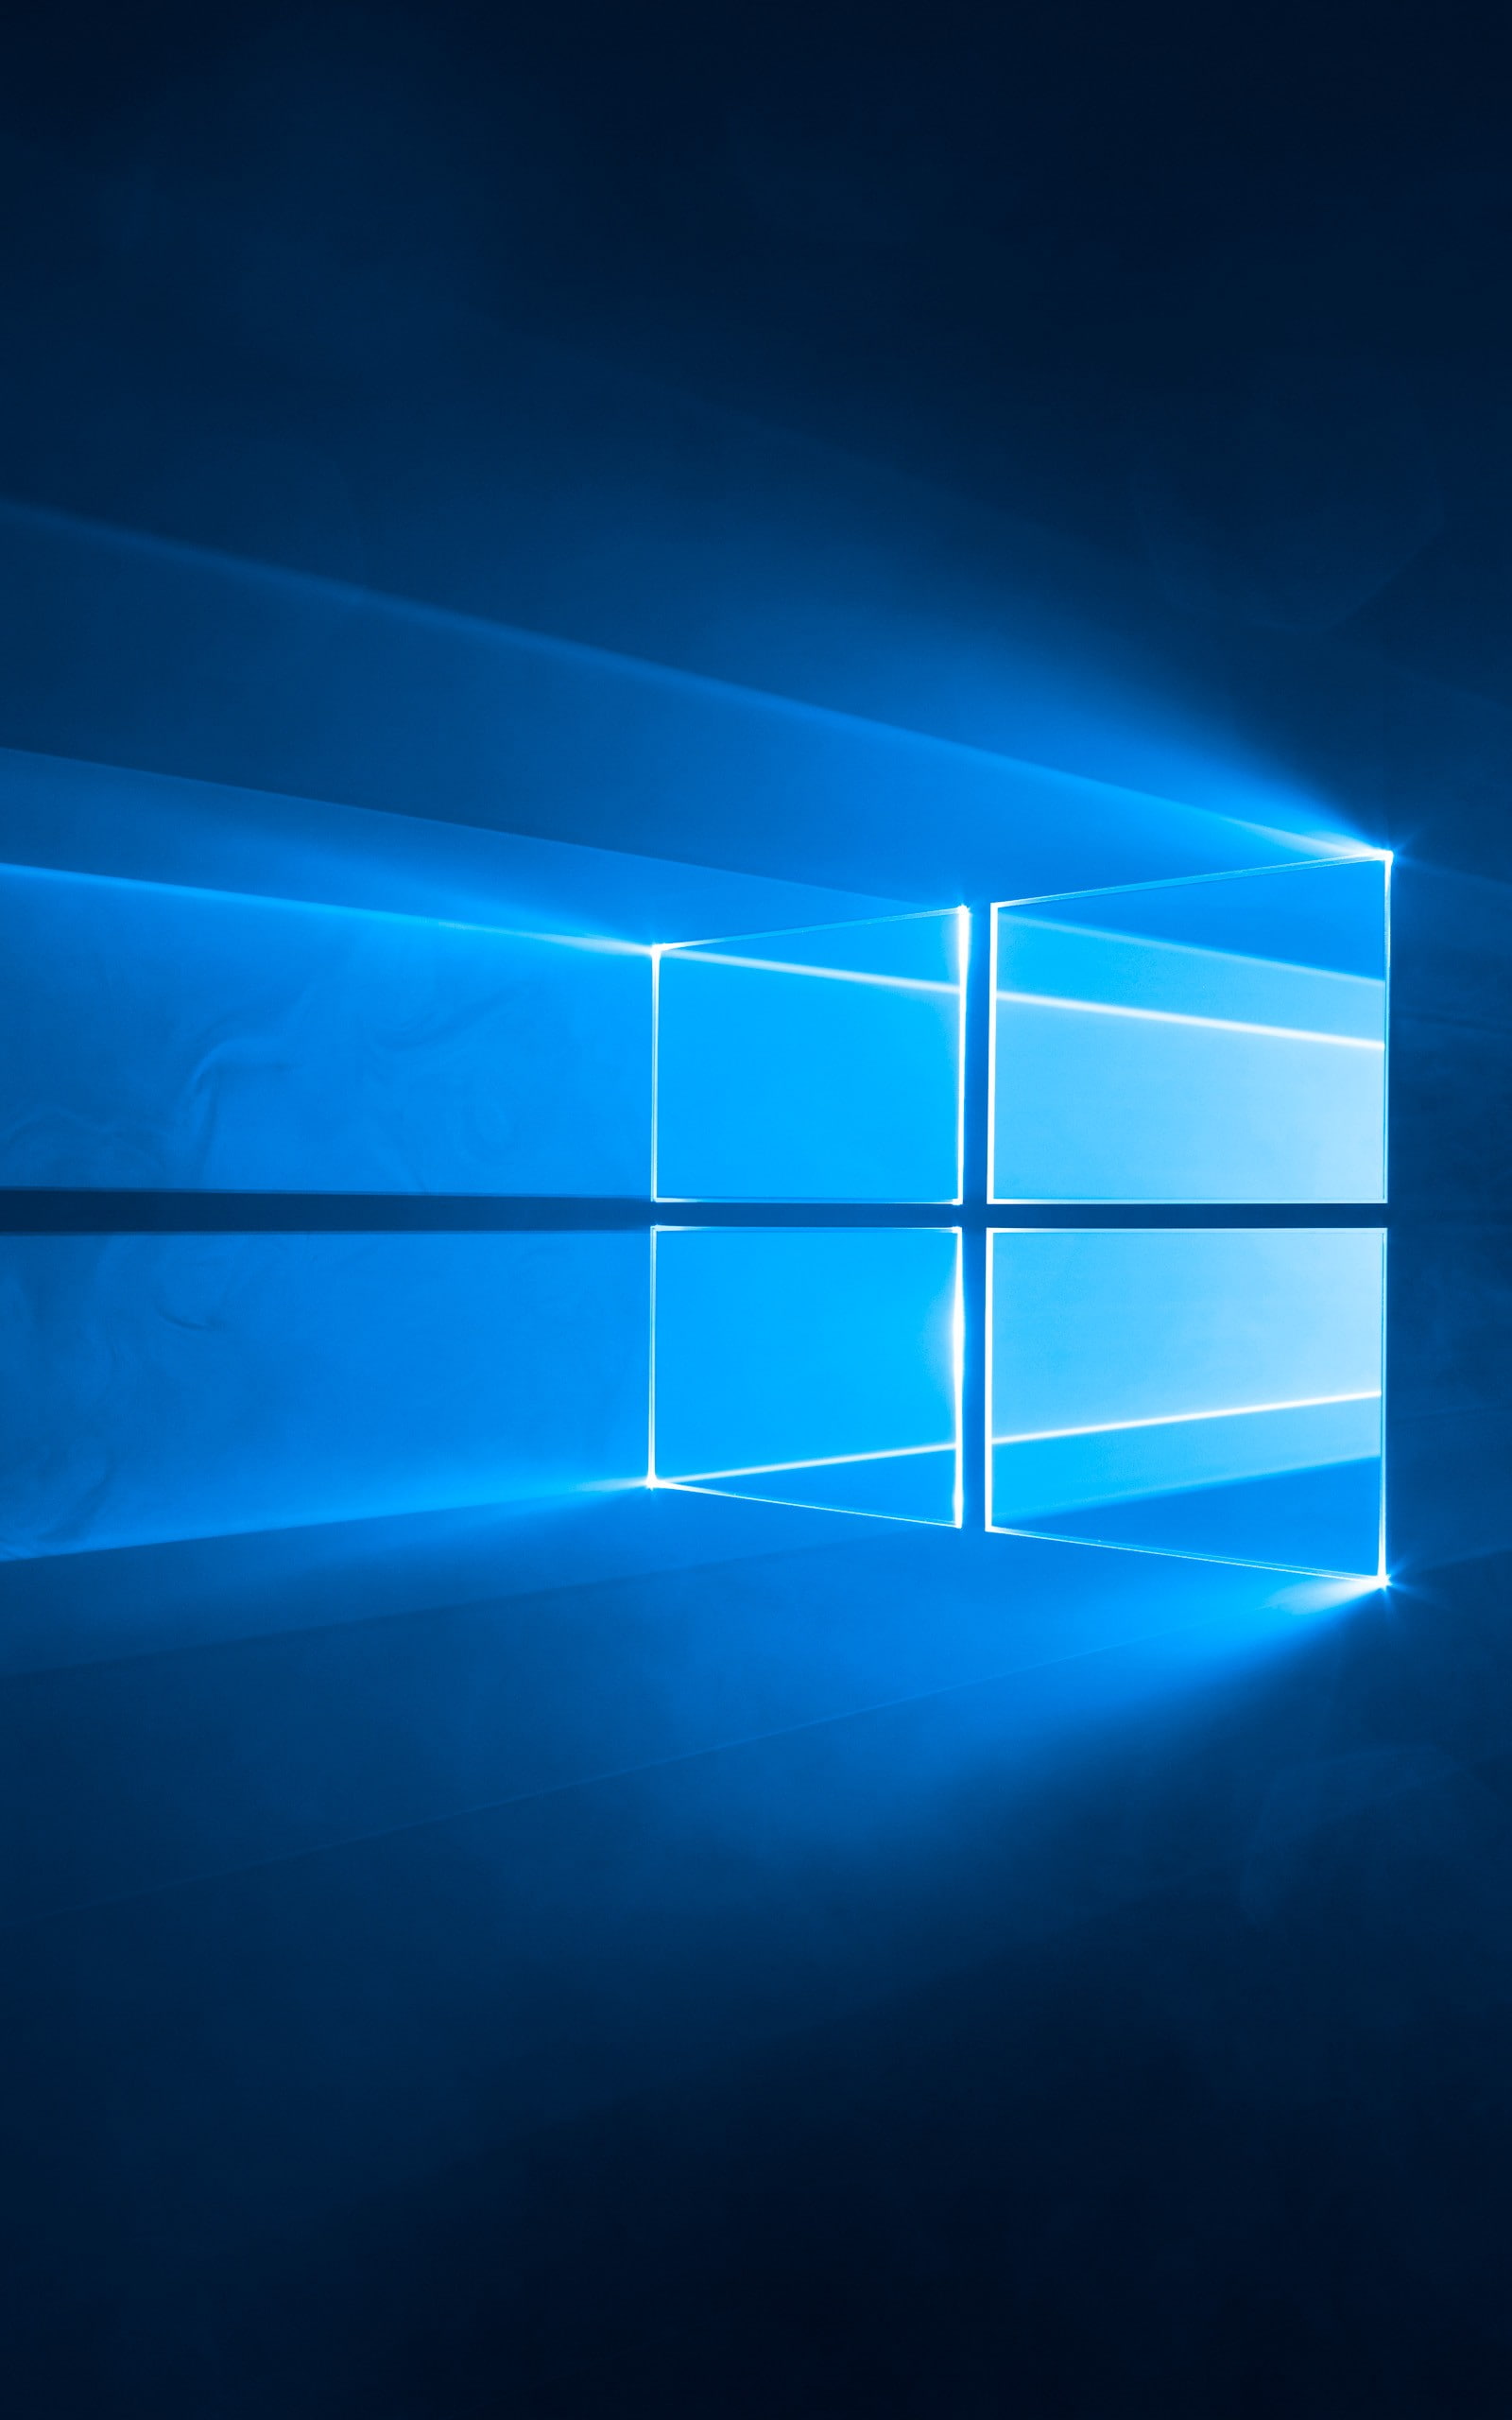 Windows 10, operating system, Microsoft Windows, portrait display